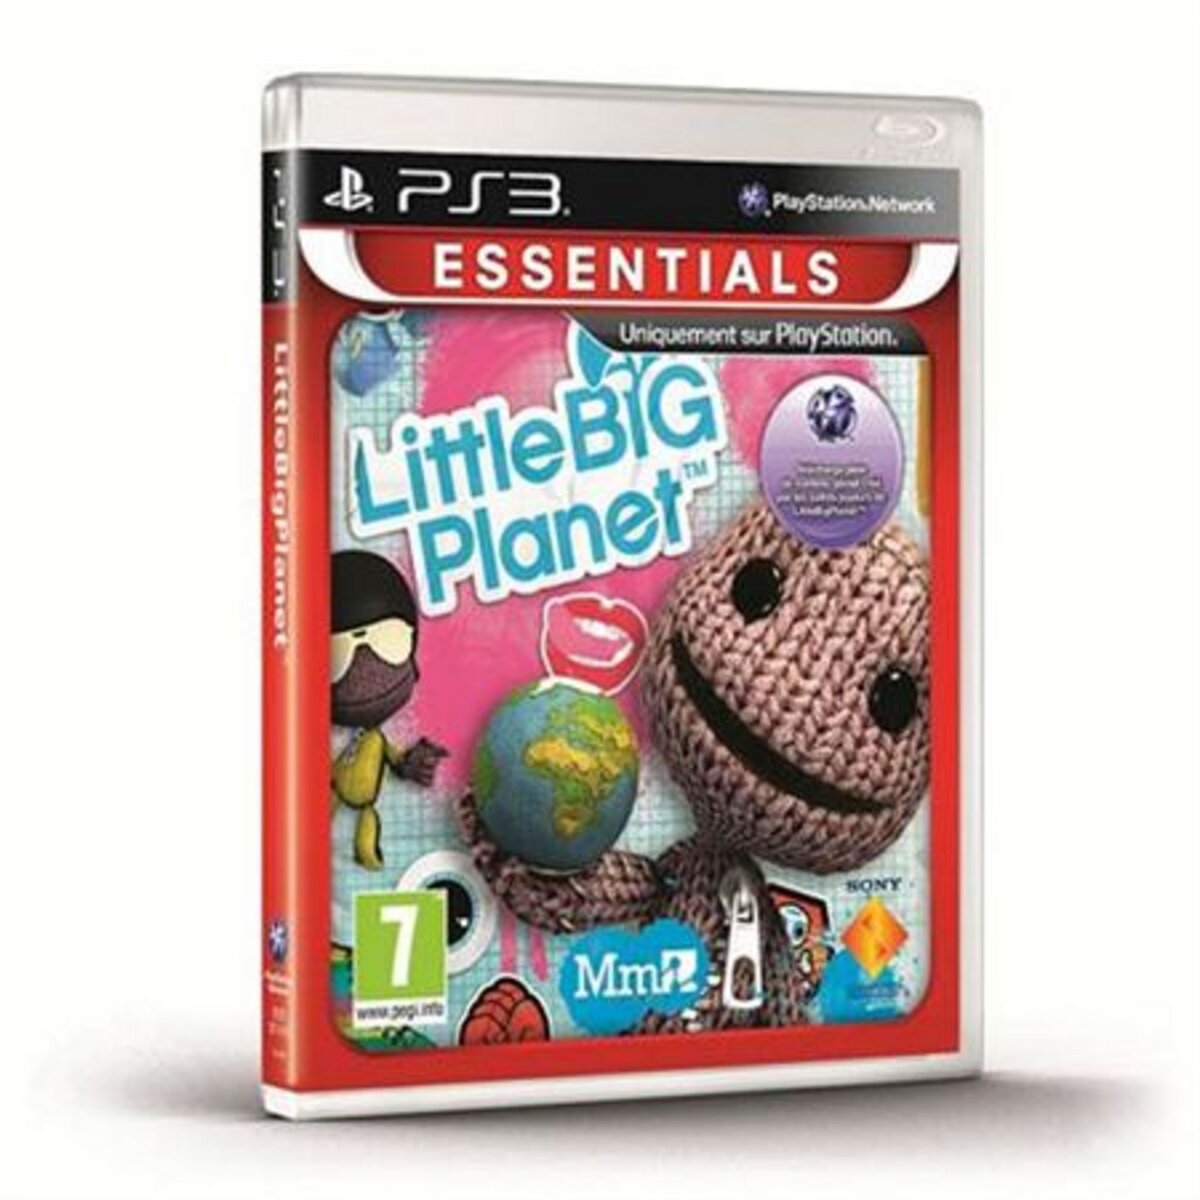 Little Big Planet - PS3 Essentials